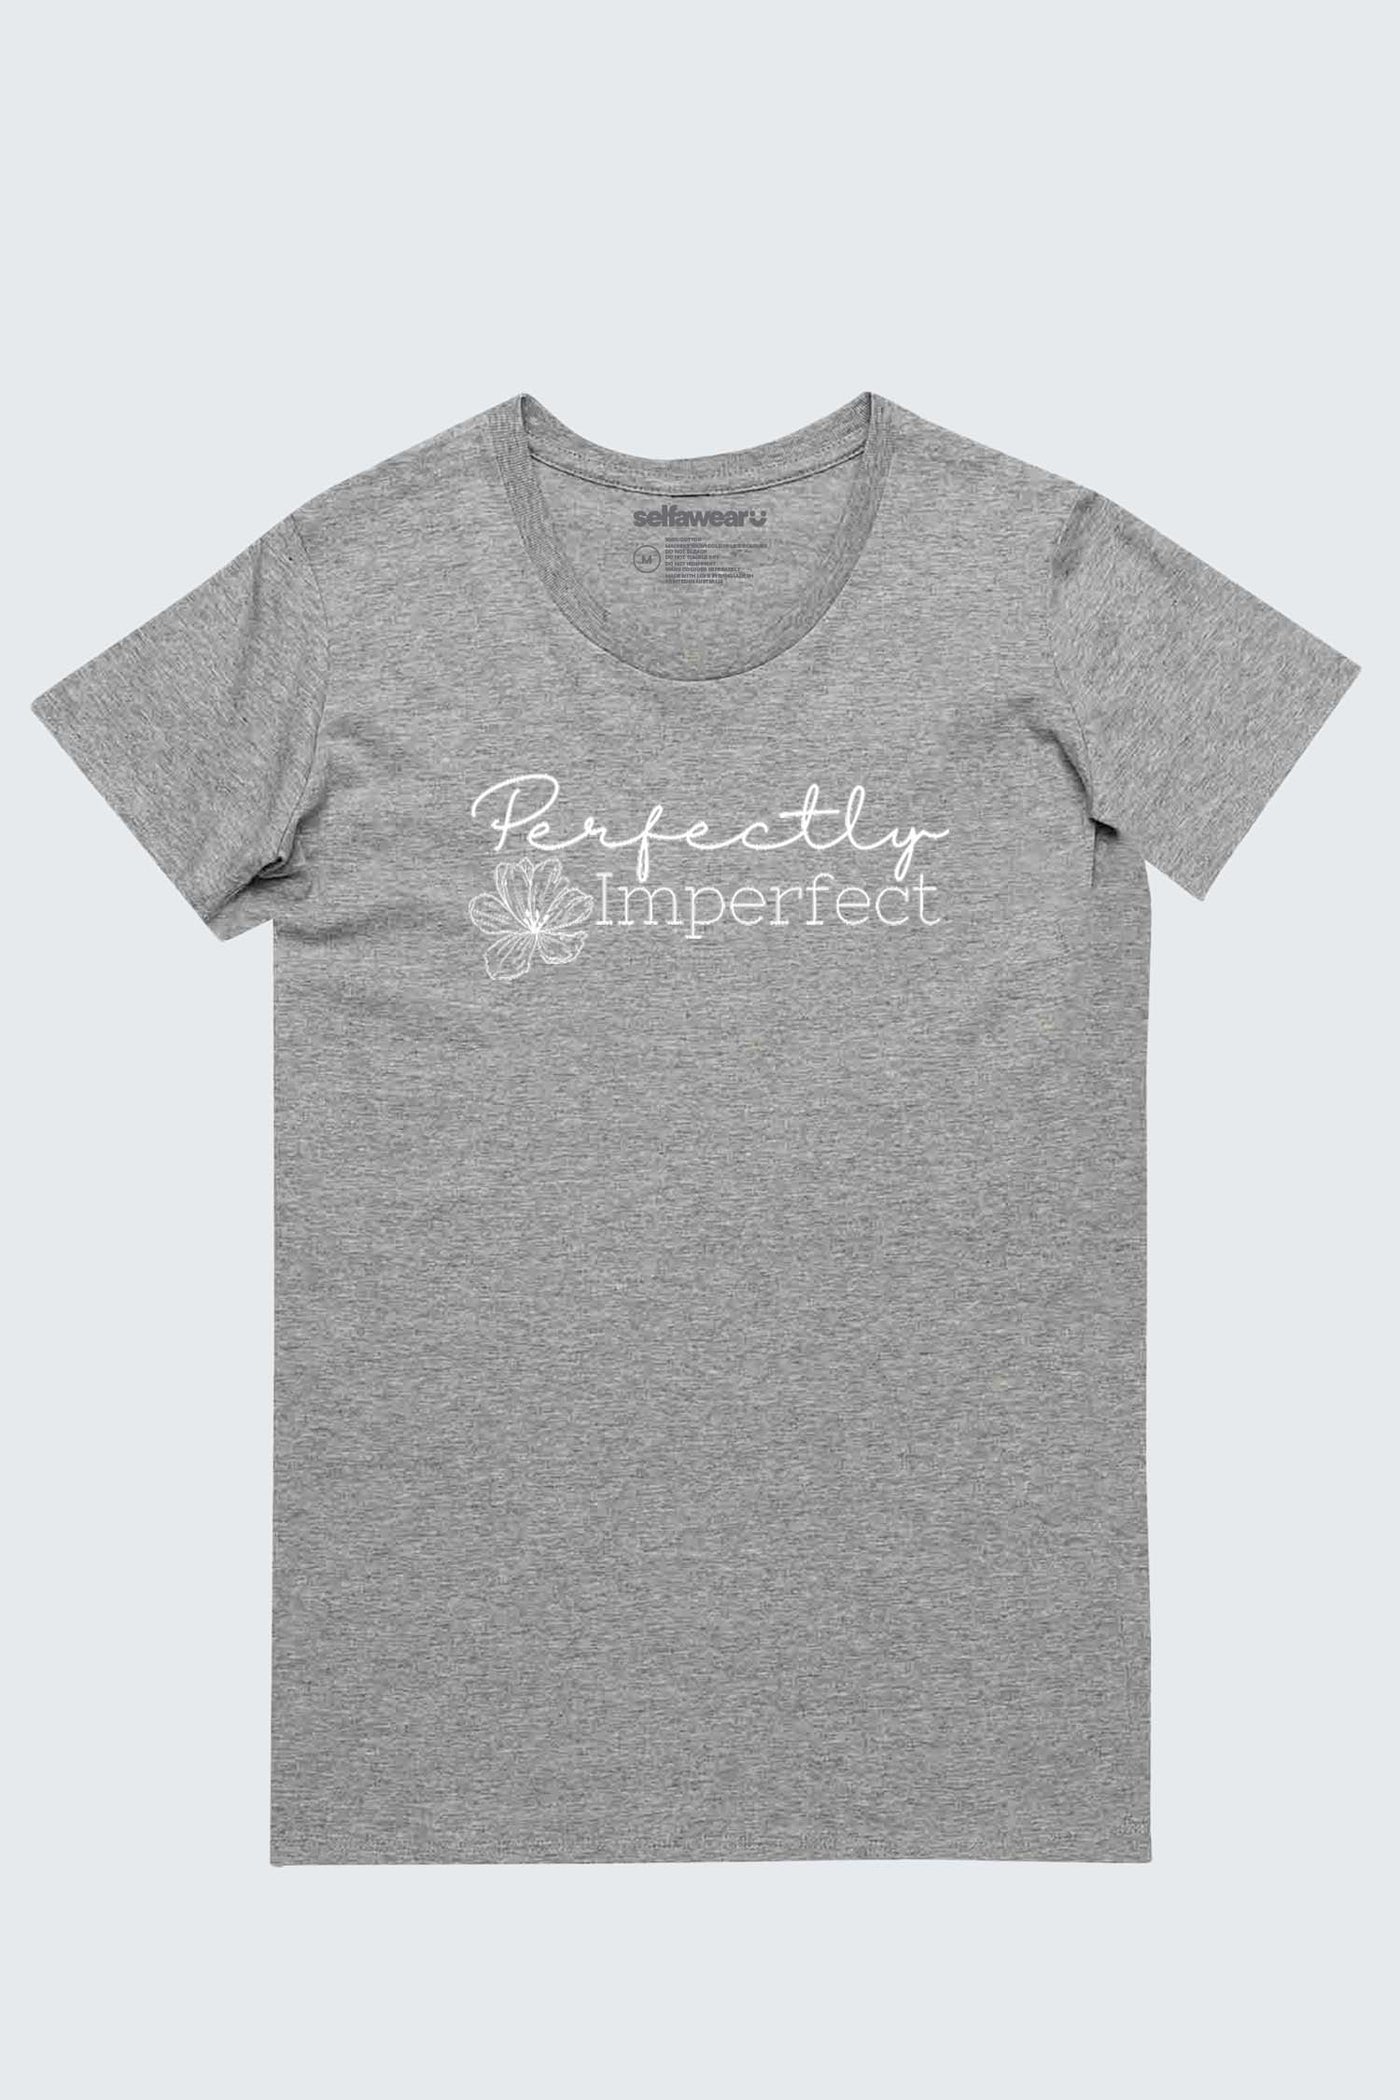 Perfectly Imperfect Flower T-Shirt Grey Shirts Selfawear 